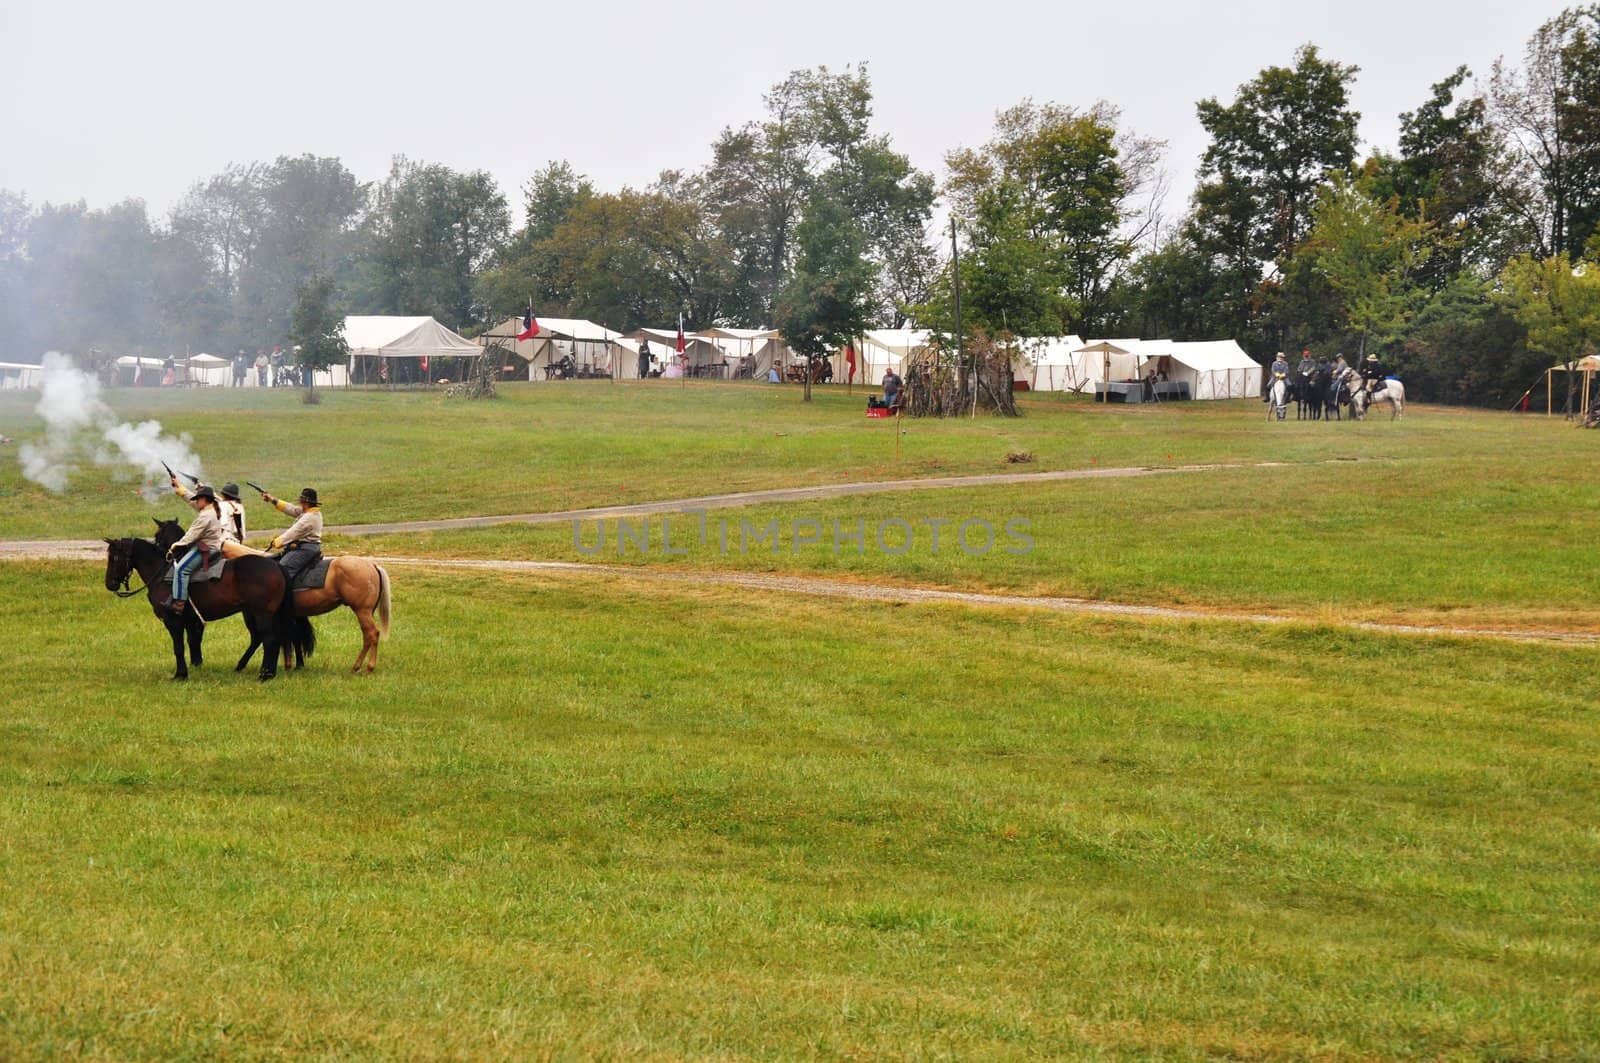 Civil War Re-enactment - background on horses